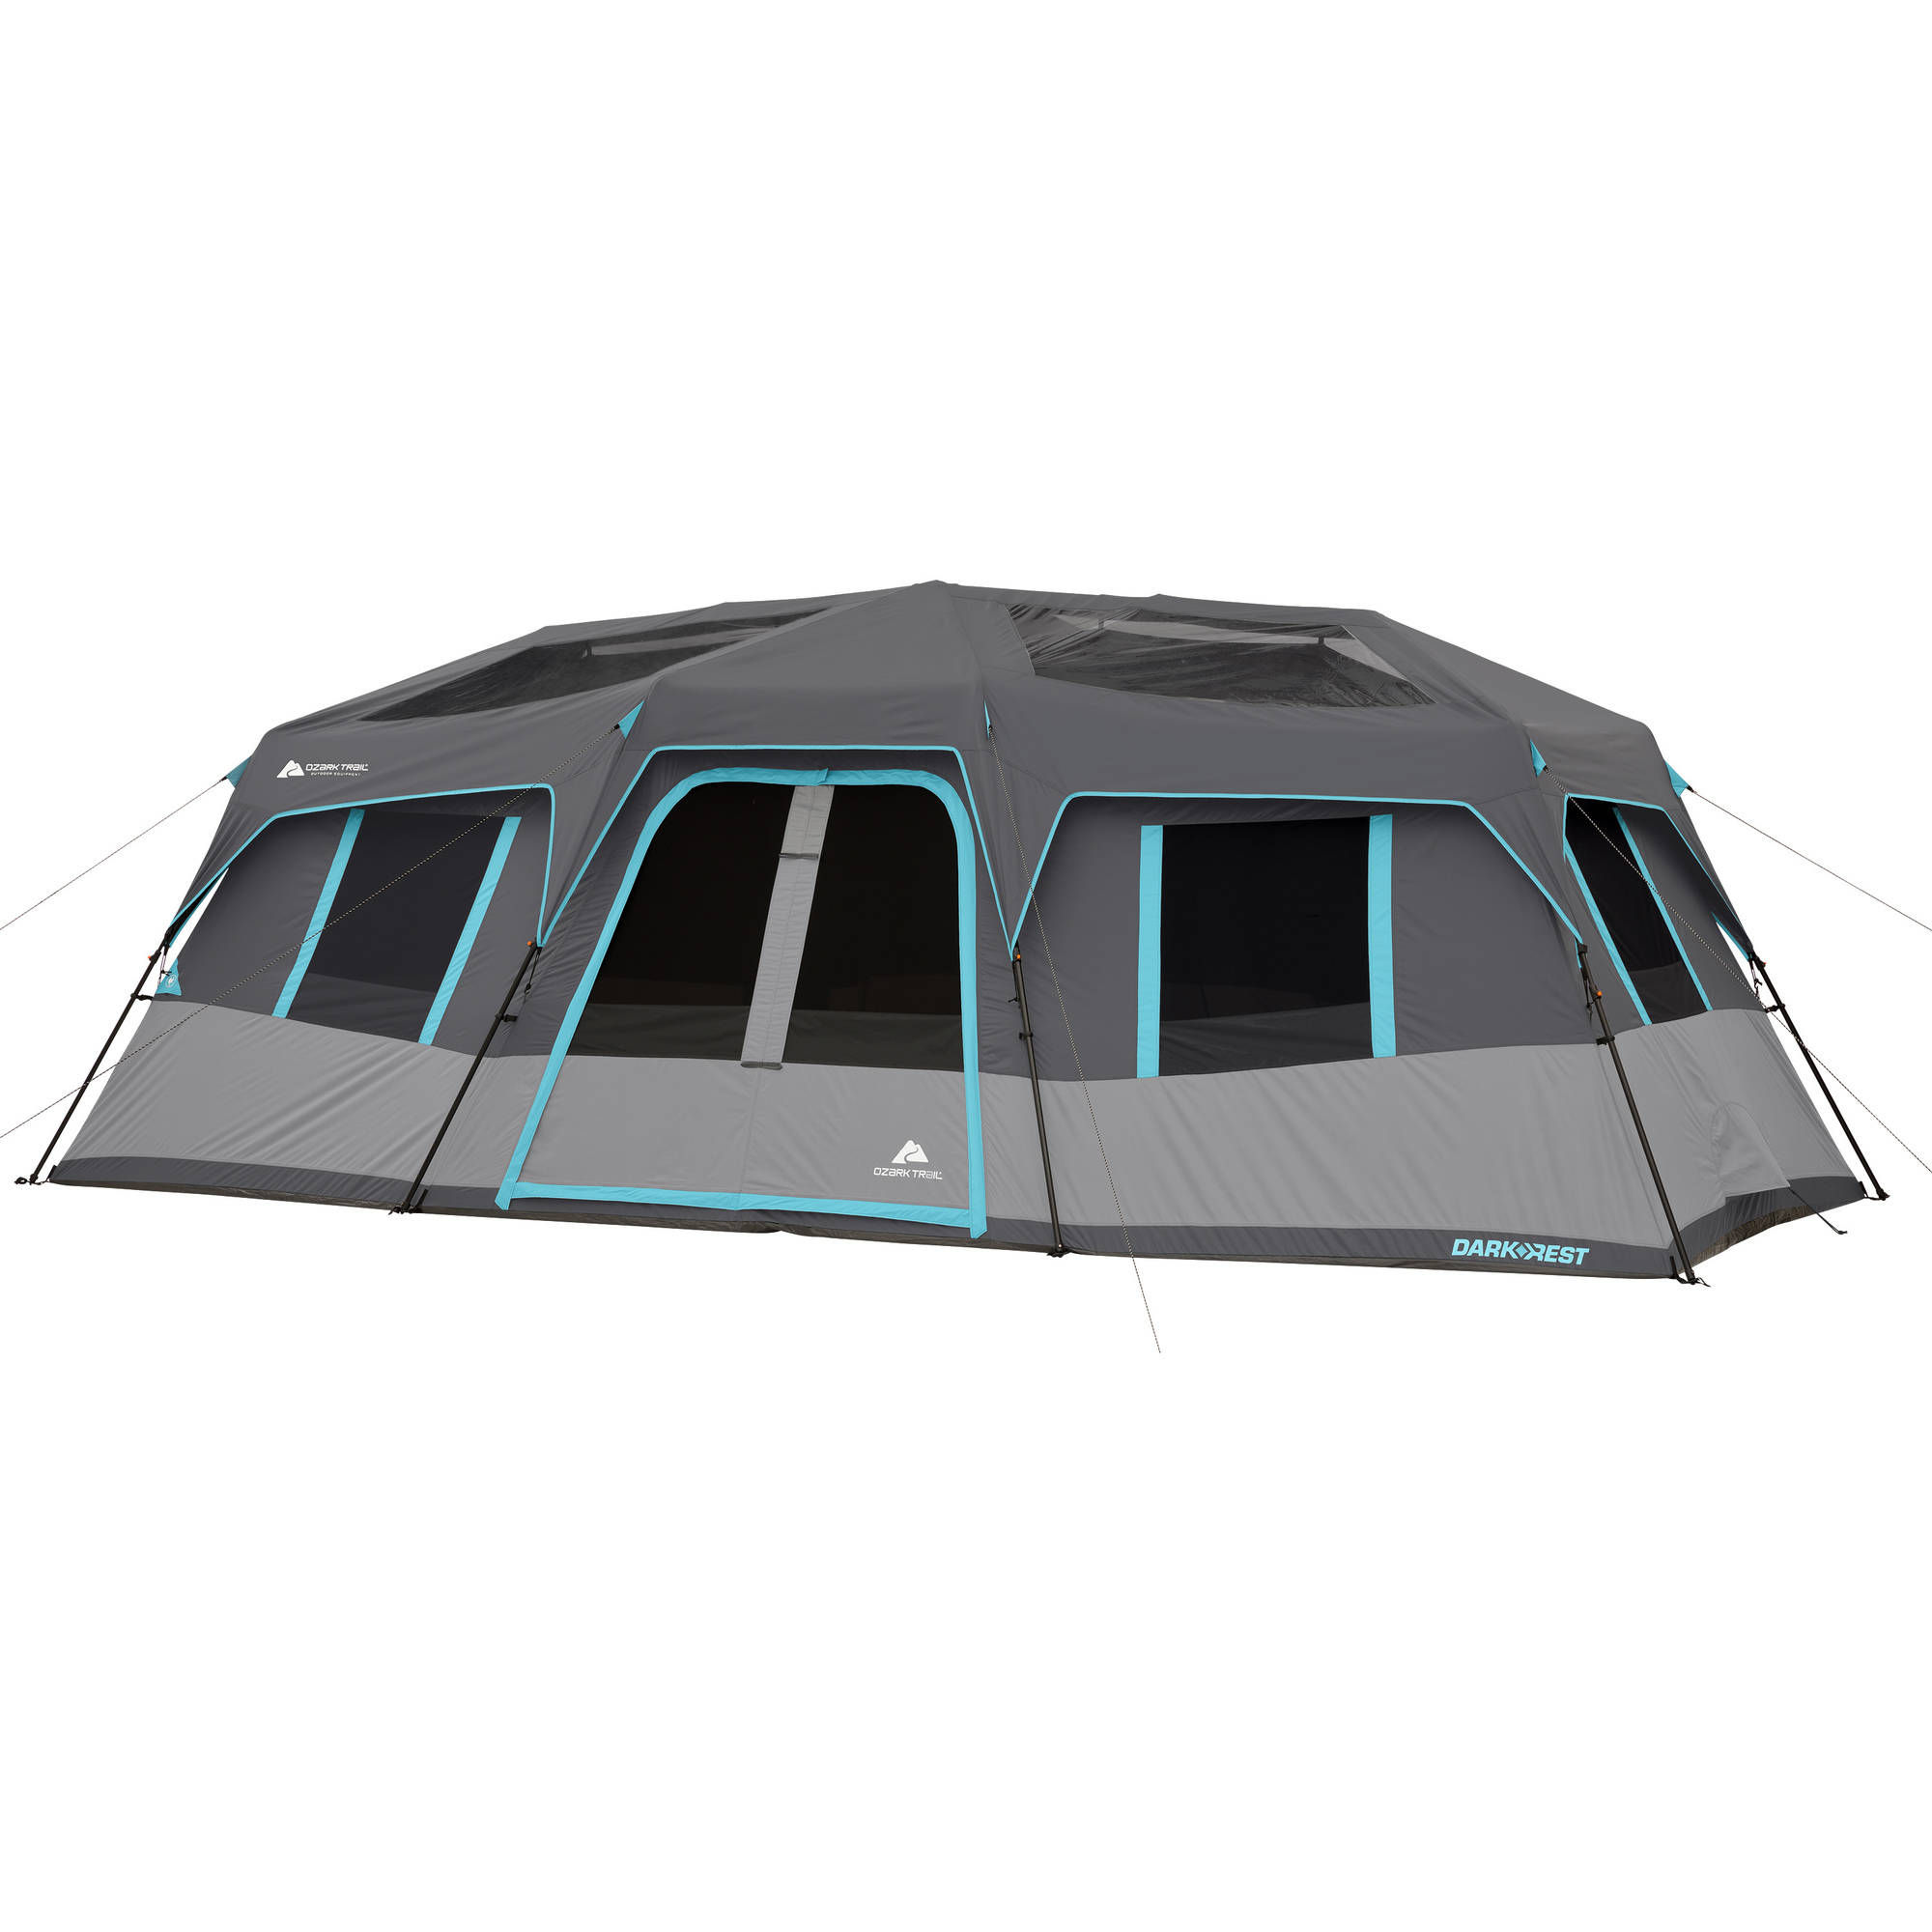 Ozark Trail 20′ x 10′ Dark Rest Instant Cabin Tent, Sleeps 12